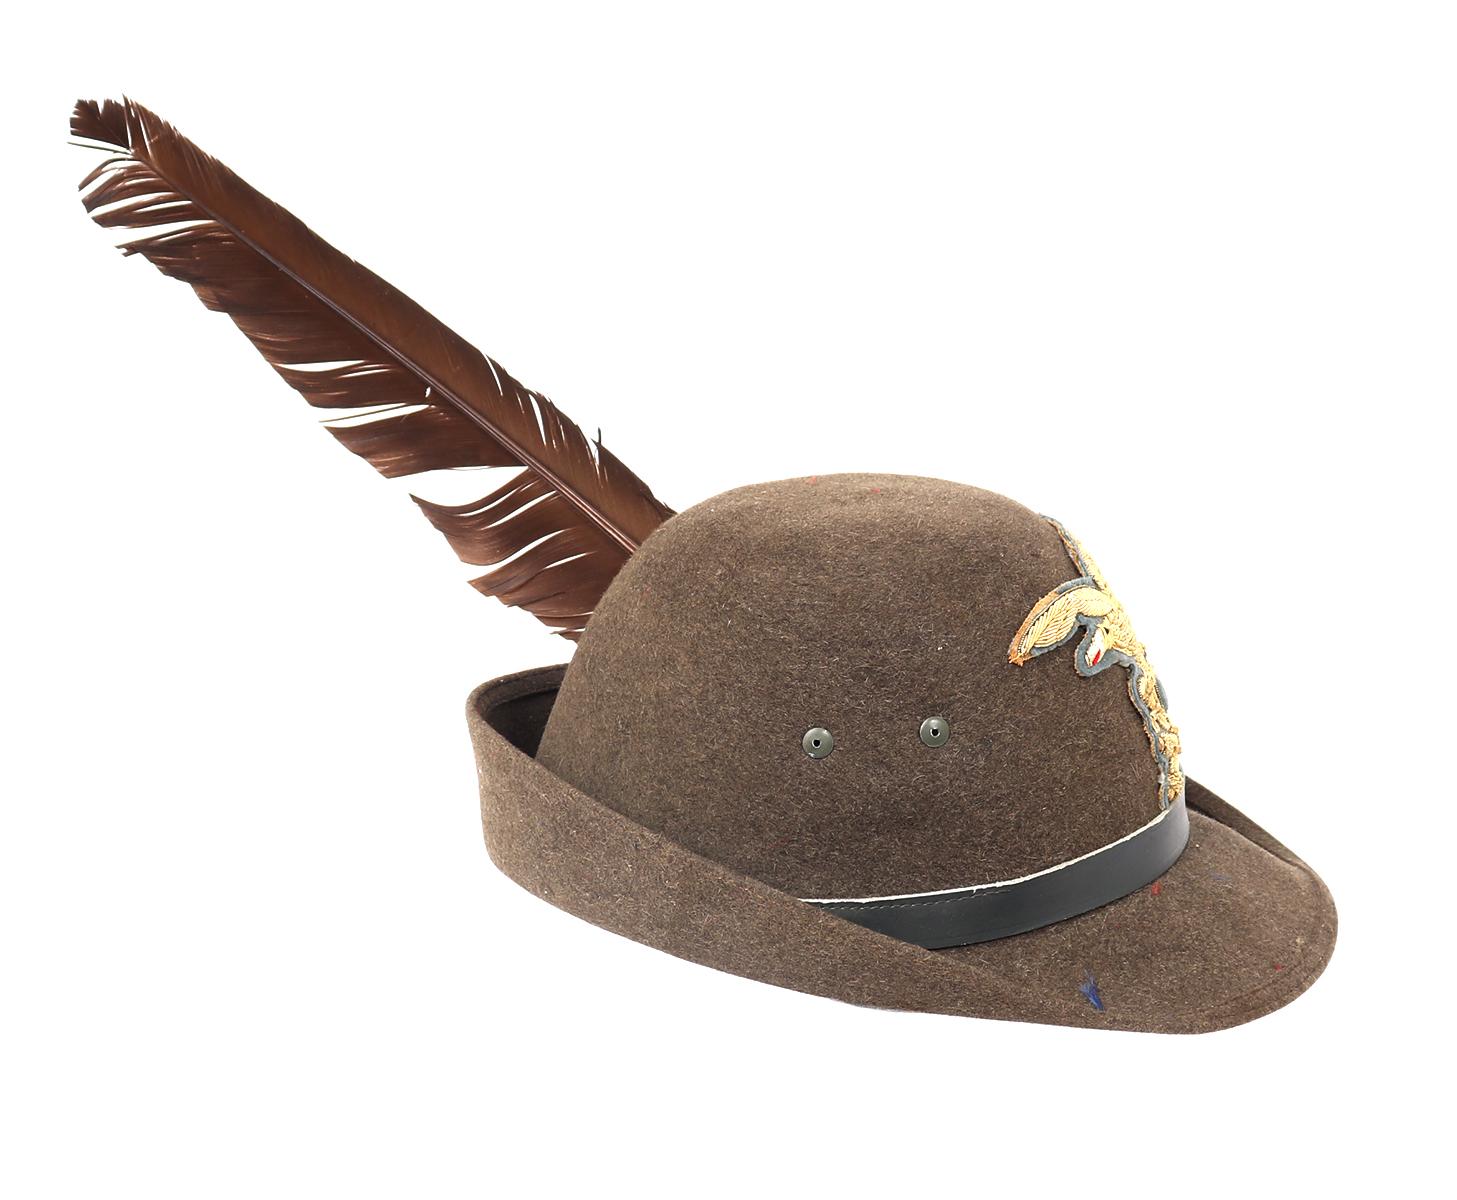 Italian Mountain Troops Alpini Hat (The Black Feathers)